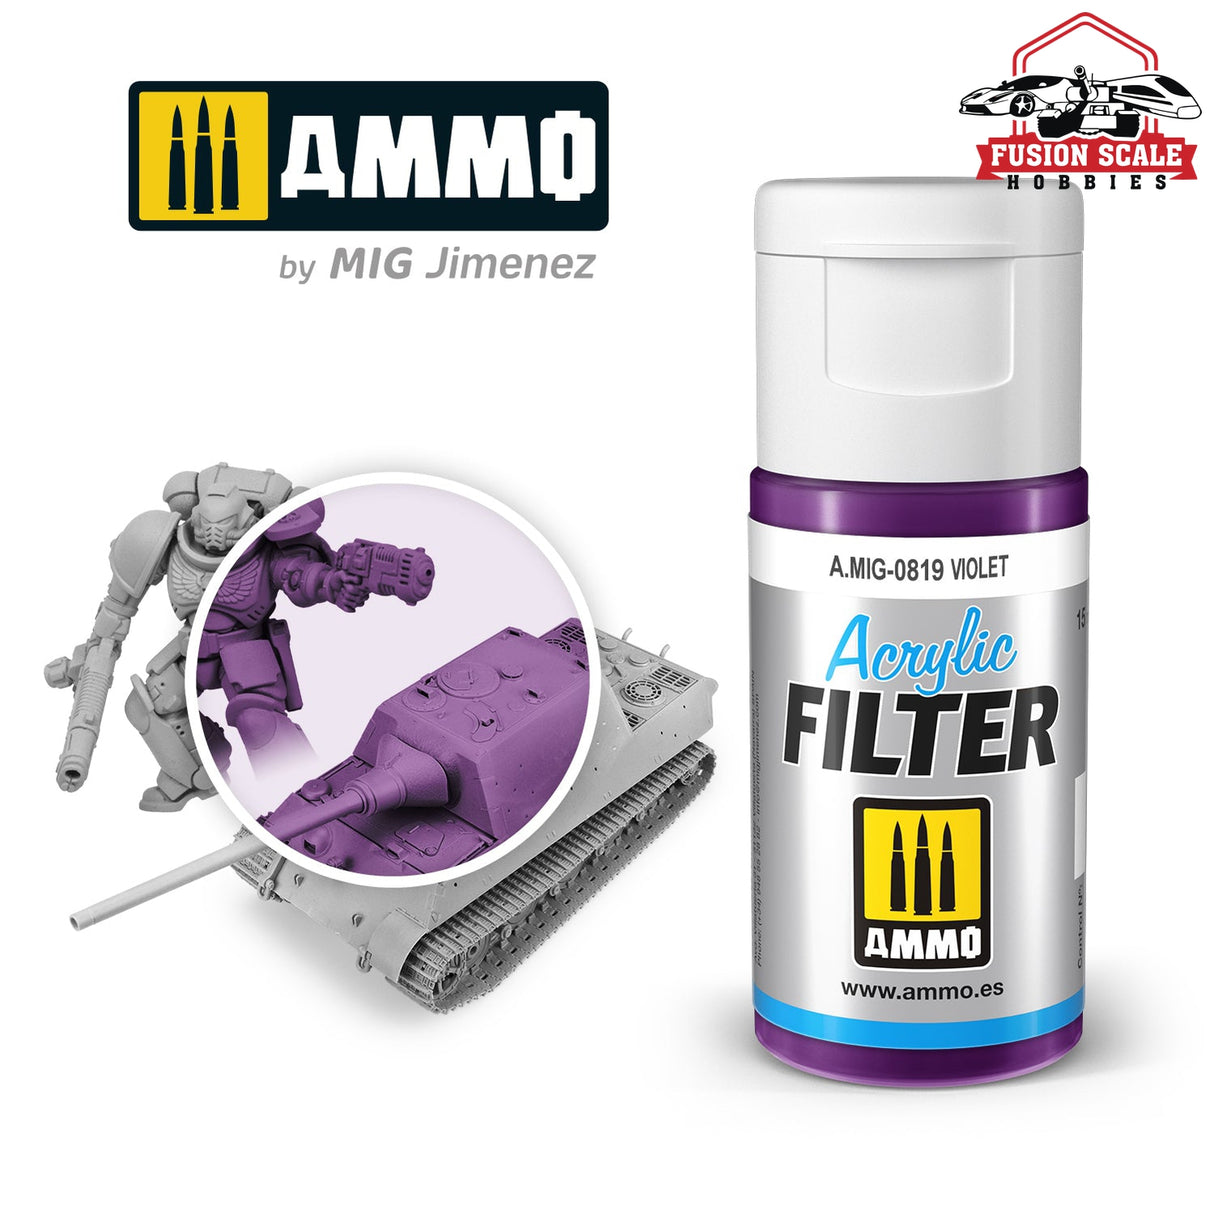 Ammo Mig Jimenez Acrylic Filter Violet - Fusion Scale Hobbies